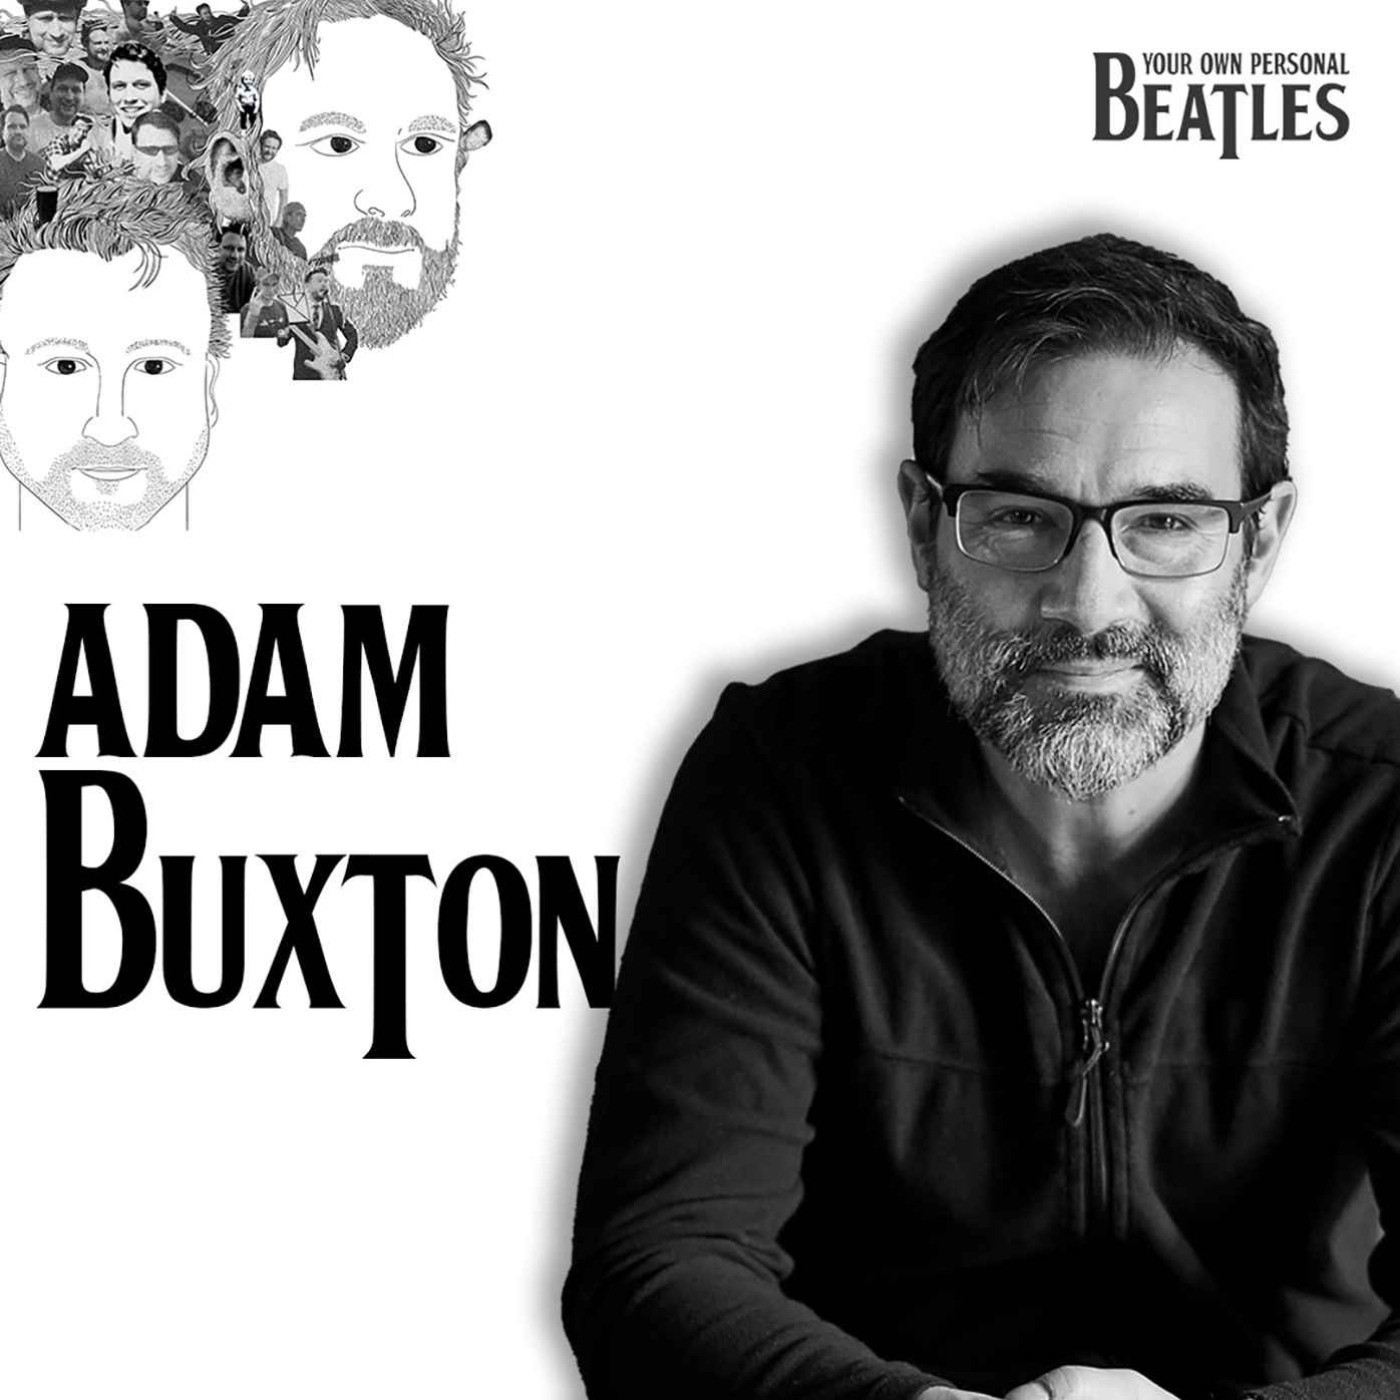 Adam Buxton's Personal Beatles